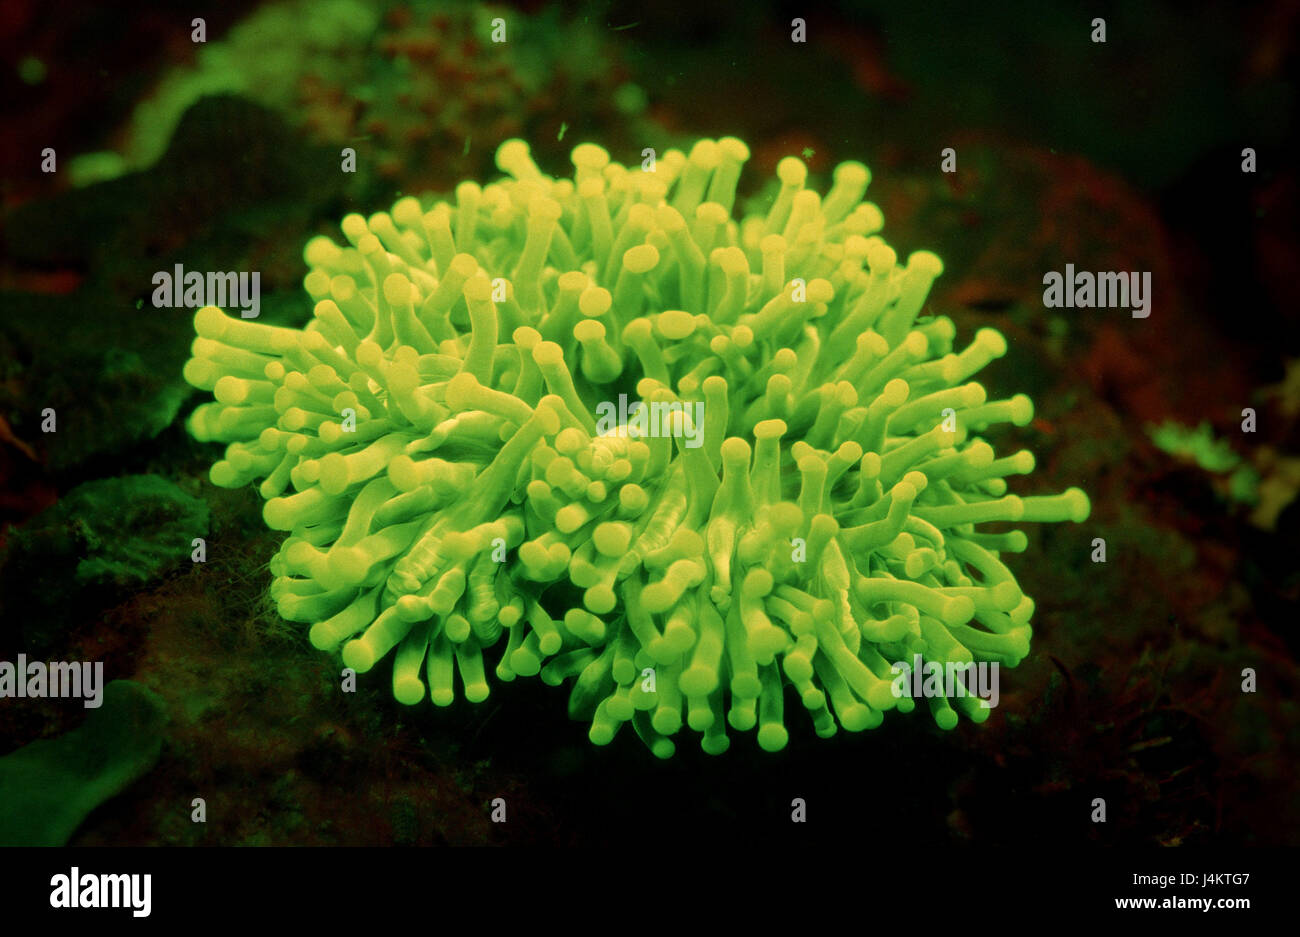 Fluorescent anemone, Heteractis sp., coral reef Stock Photo